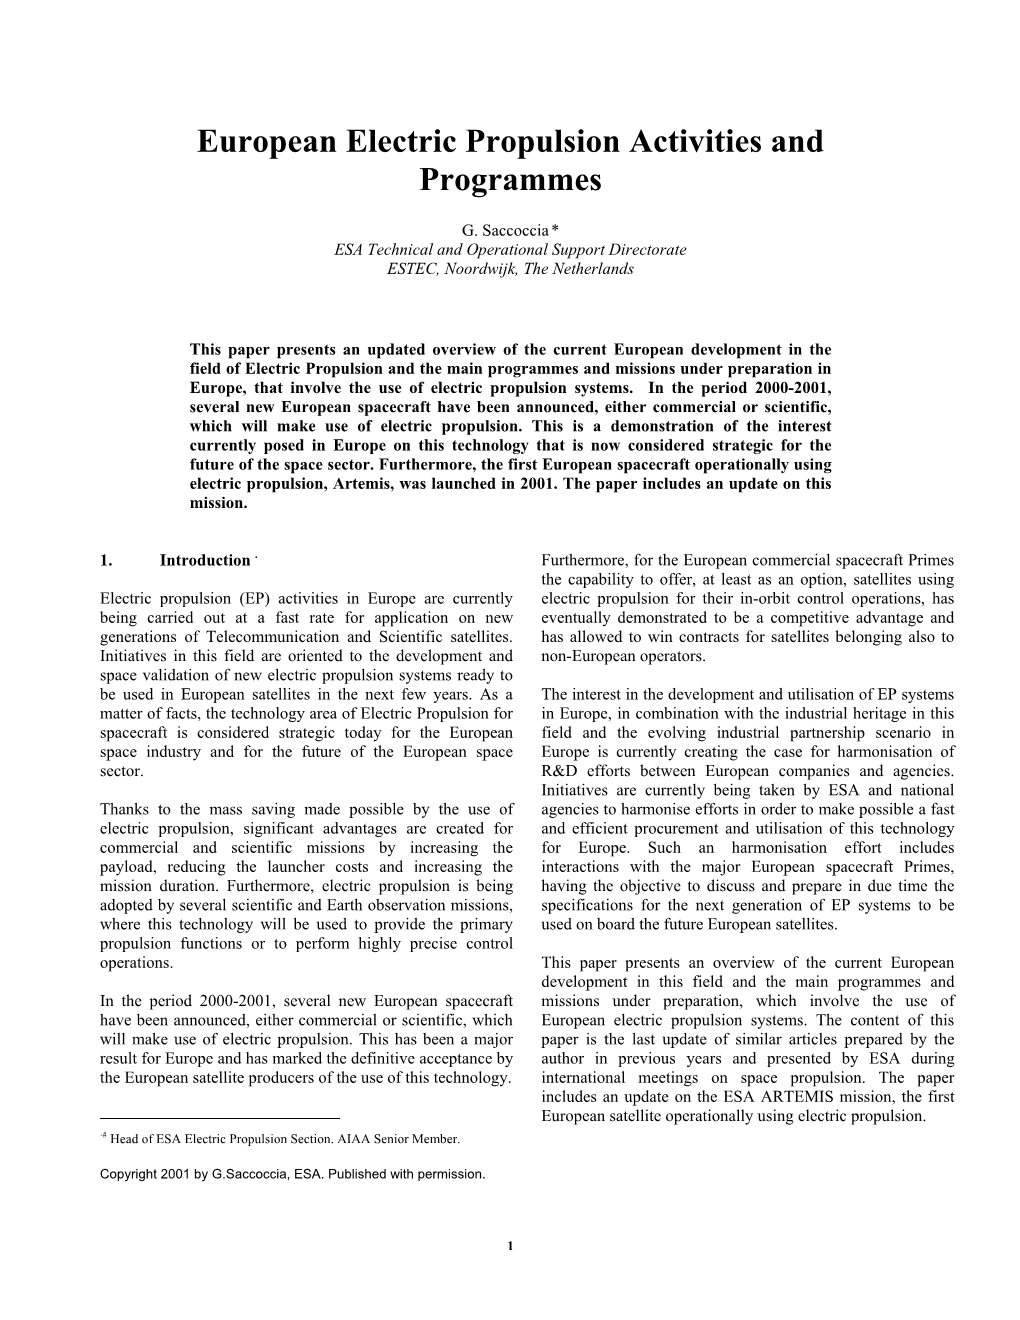 European Electric Propulsion Activities and Programmes